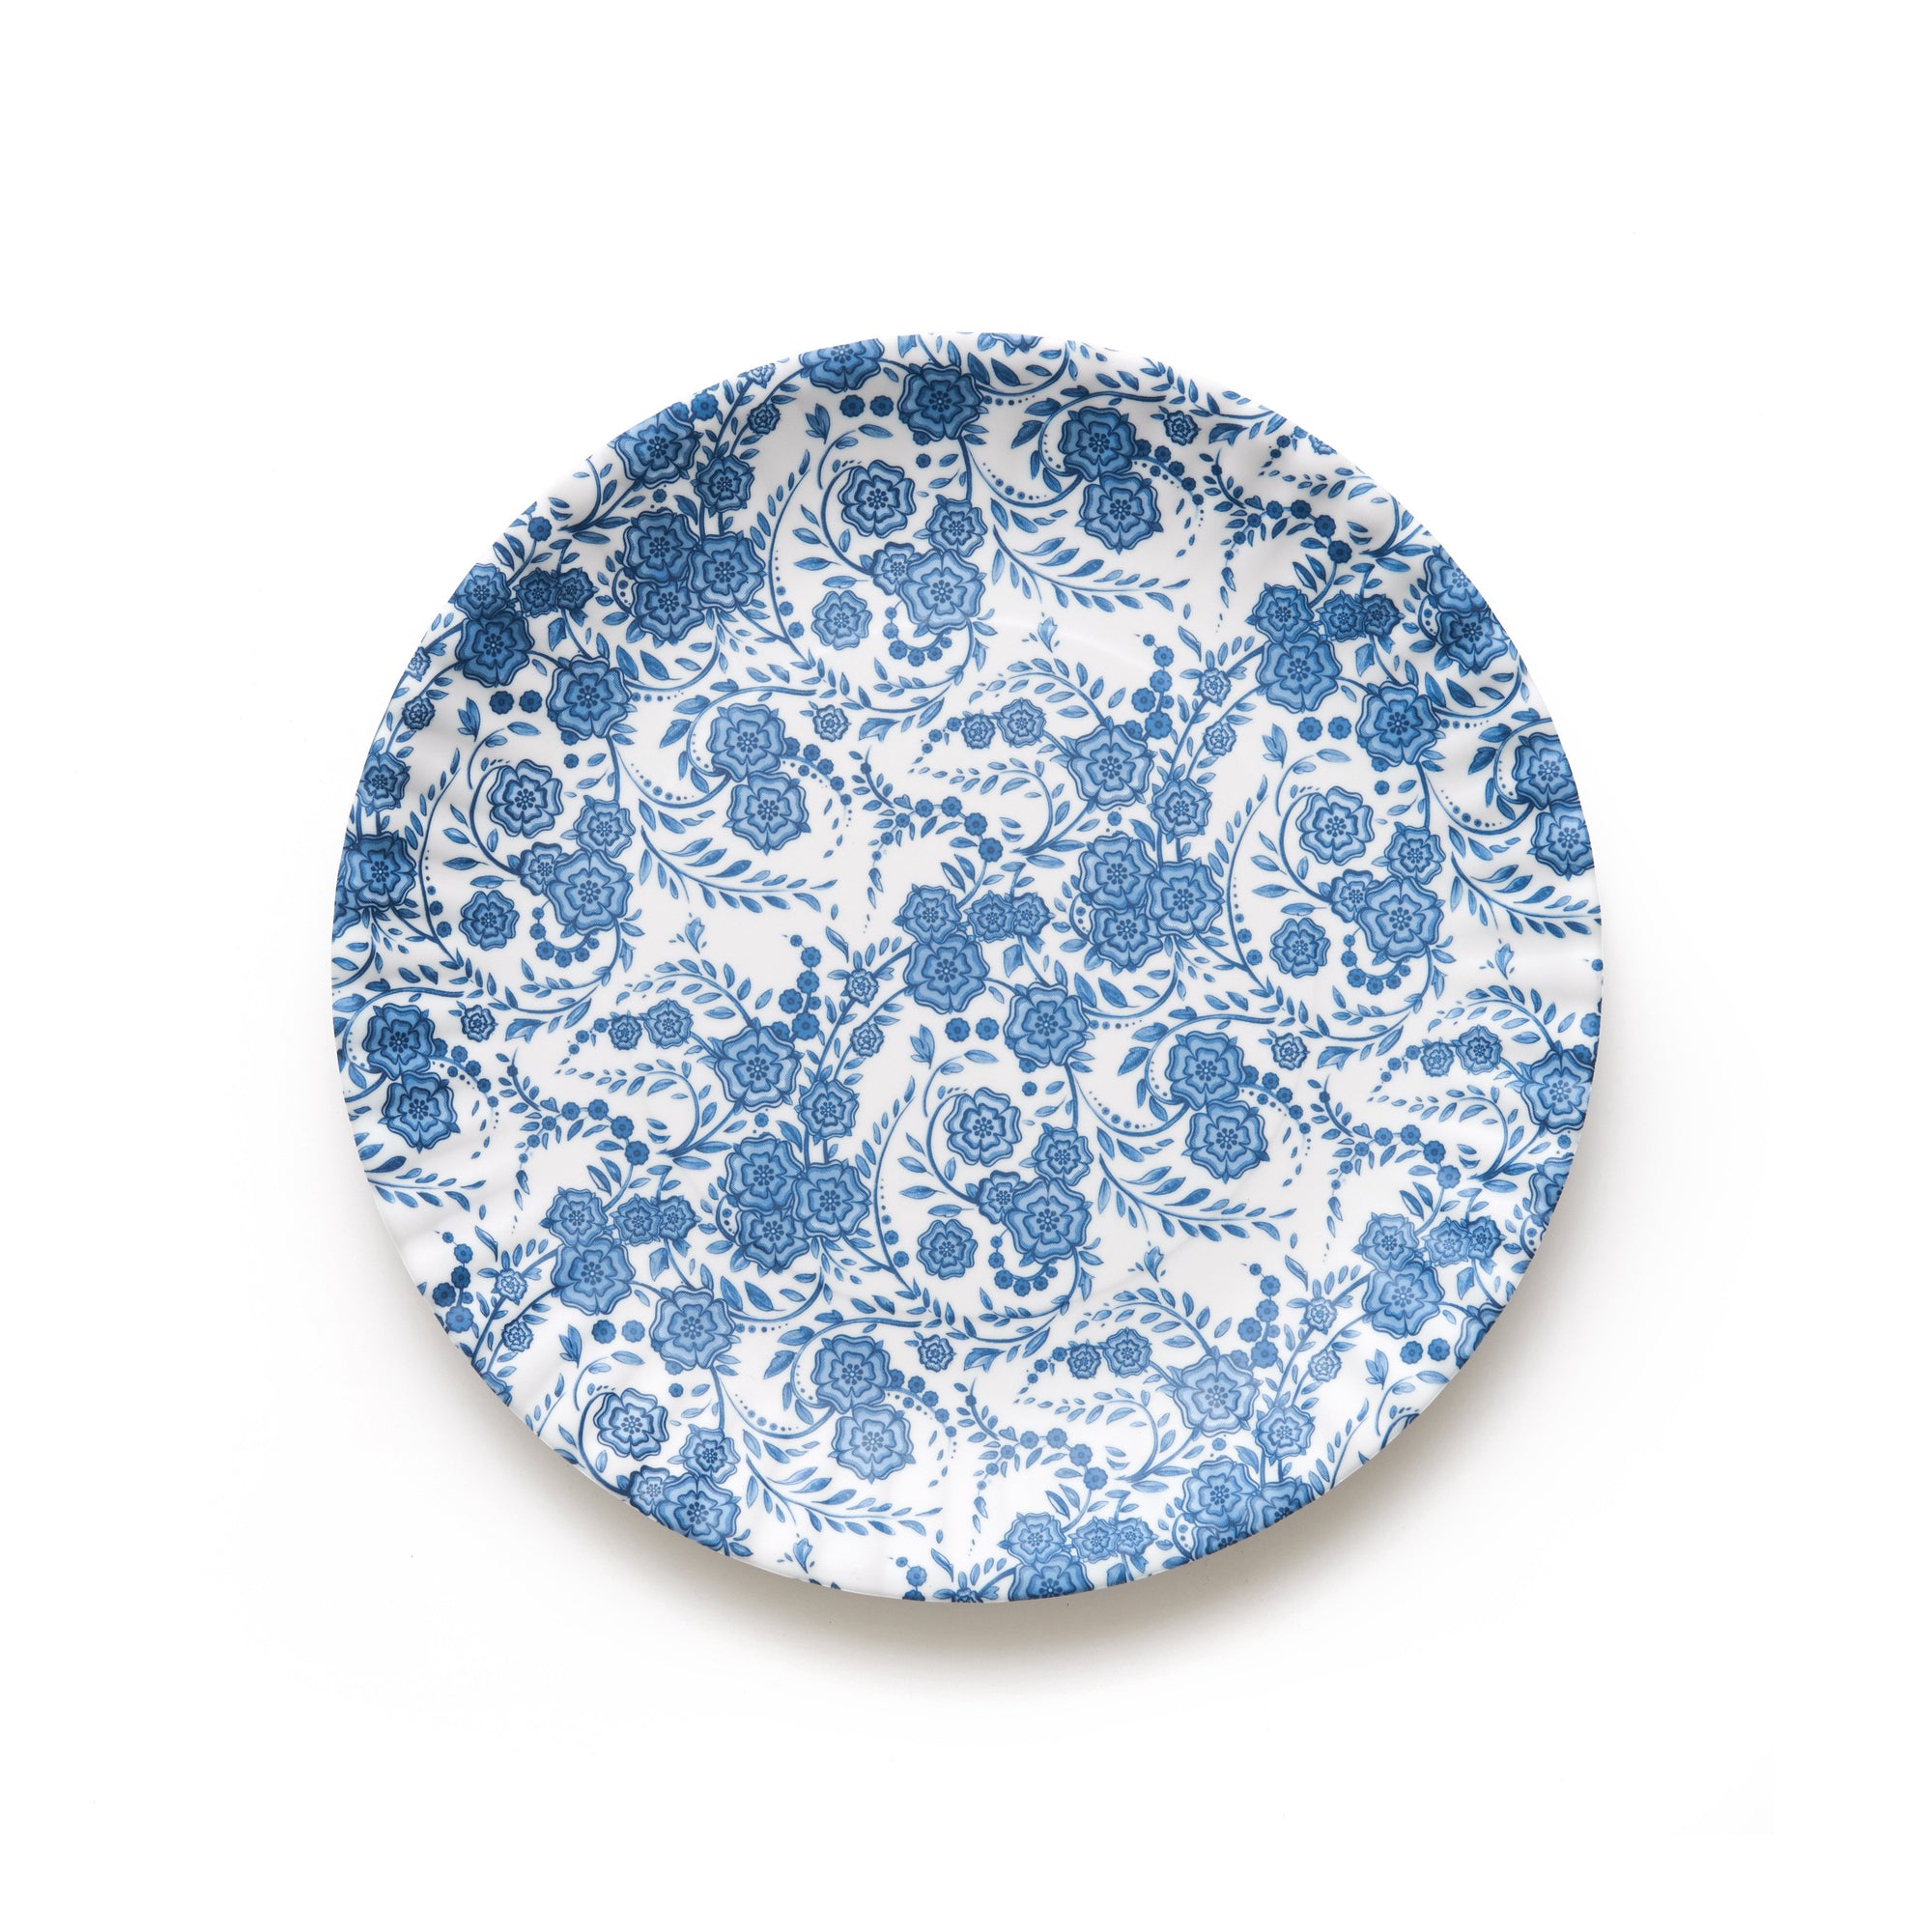 Mixed Floral Melamine Plate Set I